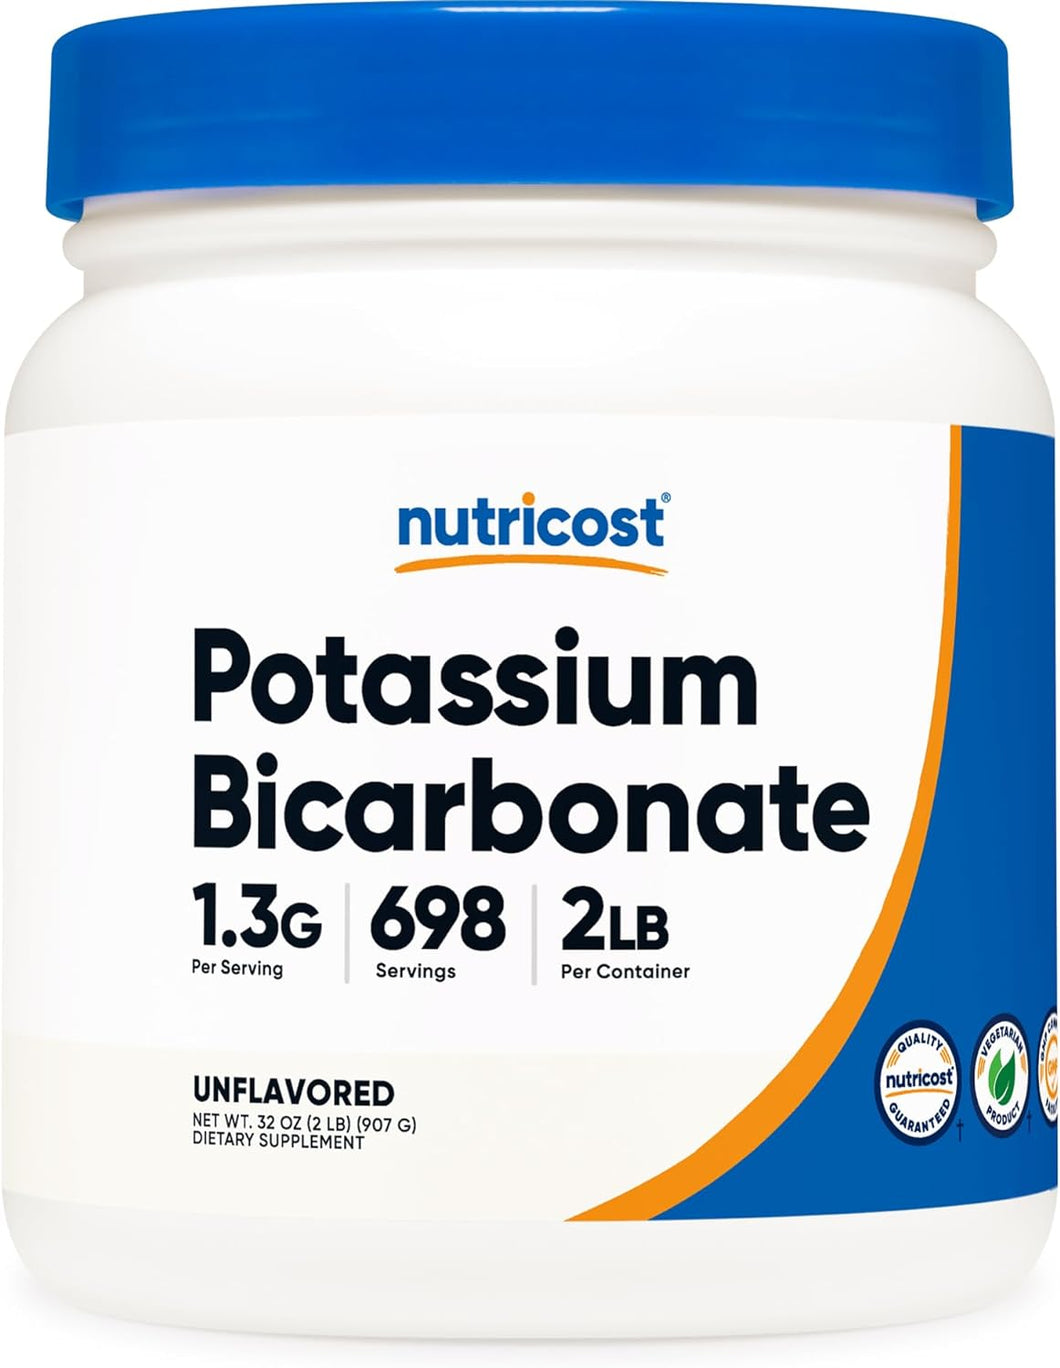 Nutricost Potassium Bicarbonate Powder 2 LB - Gluten Free, Non-GMO